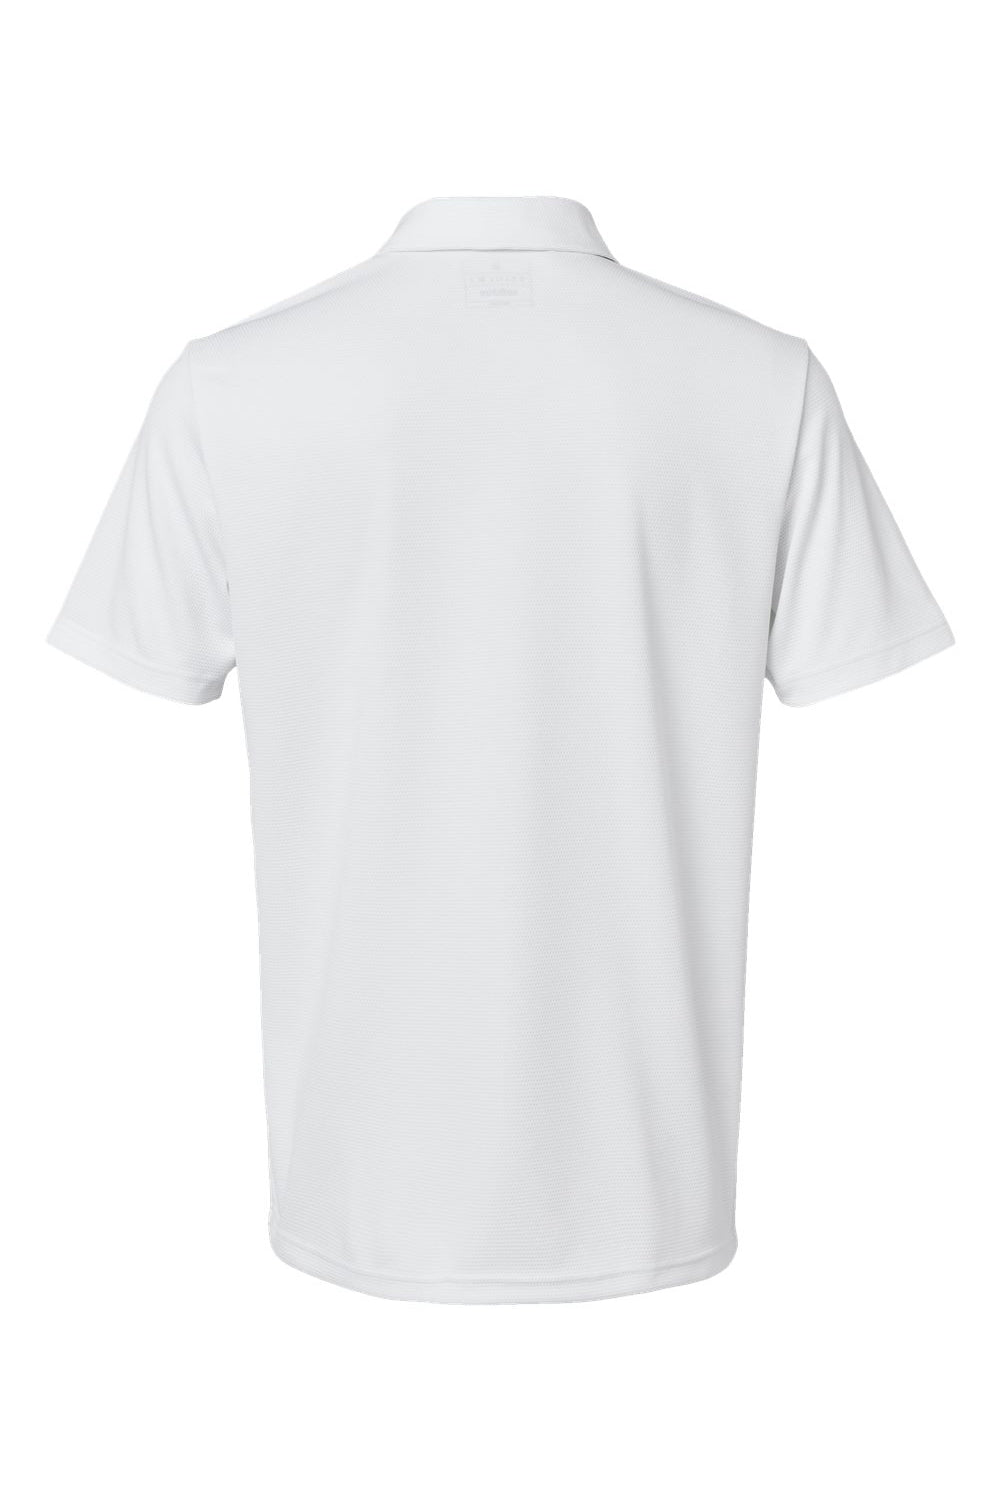 Adidas A580 Mens Micro Pique Short Sleeve Polo Shirt White Flat Back